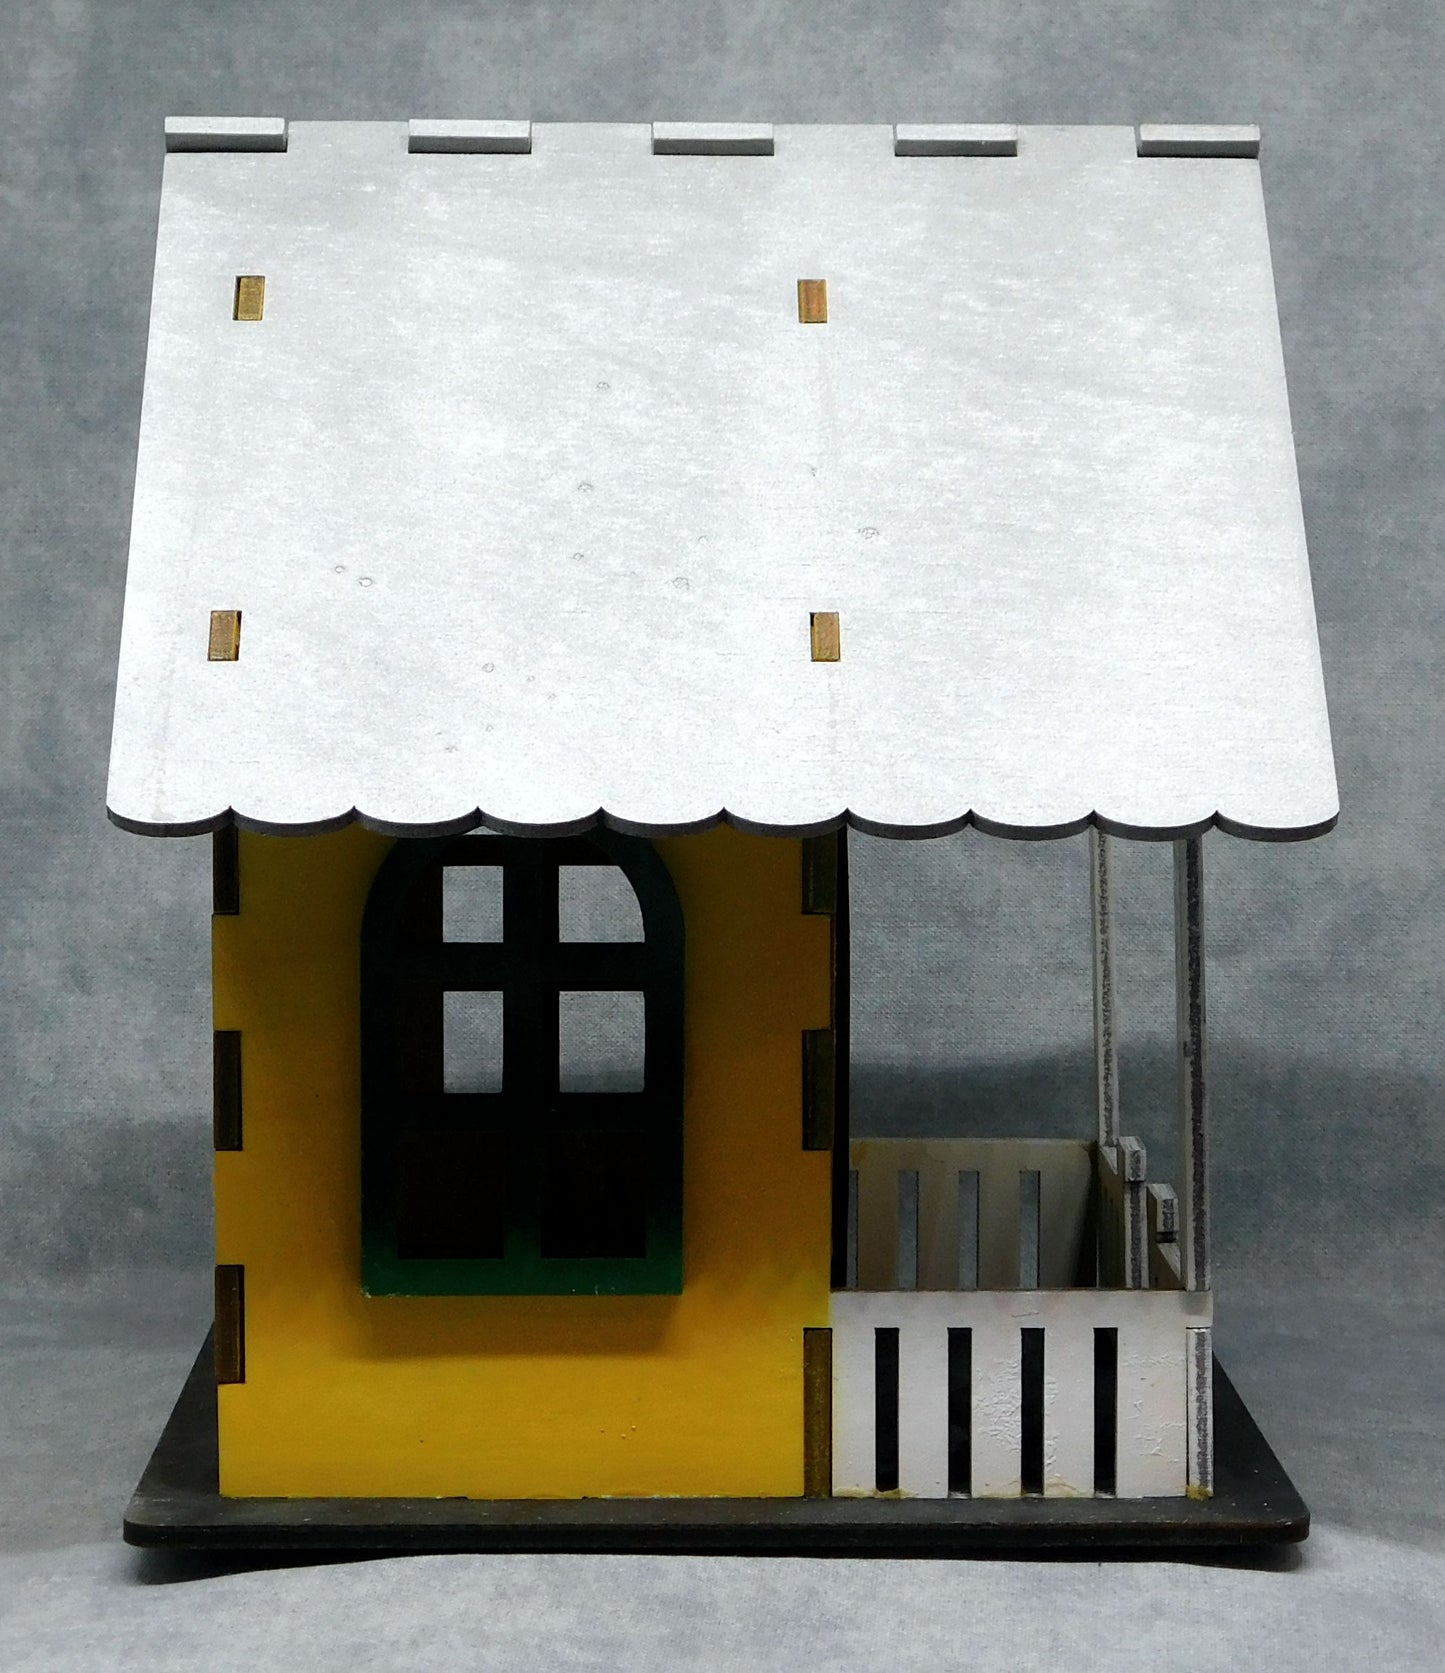 Cottage Retreat Birdhouse Kit